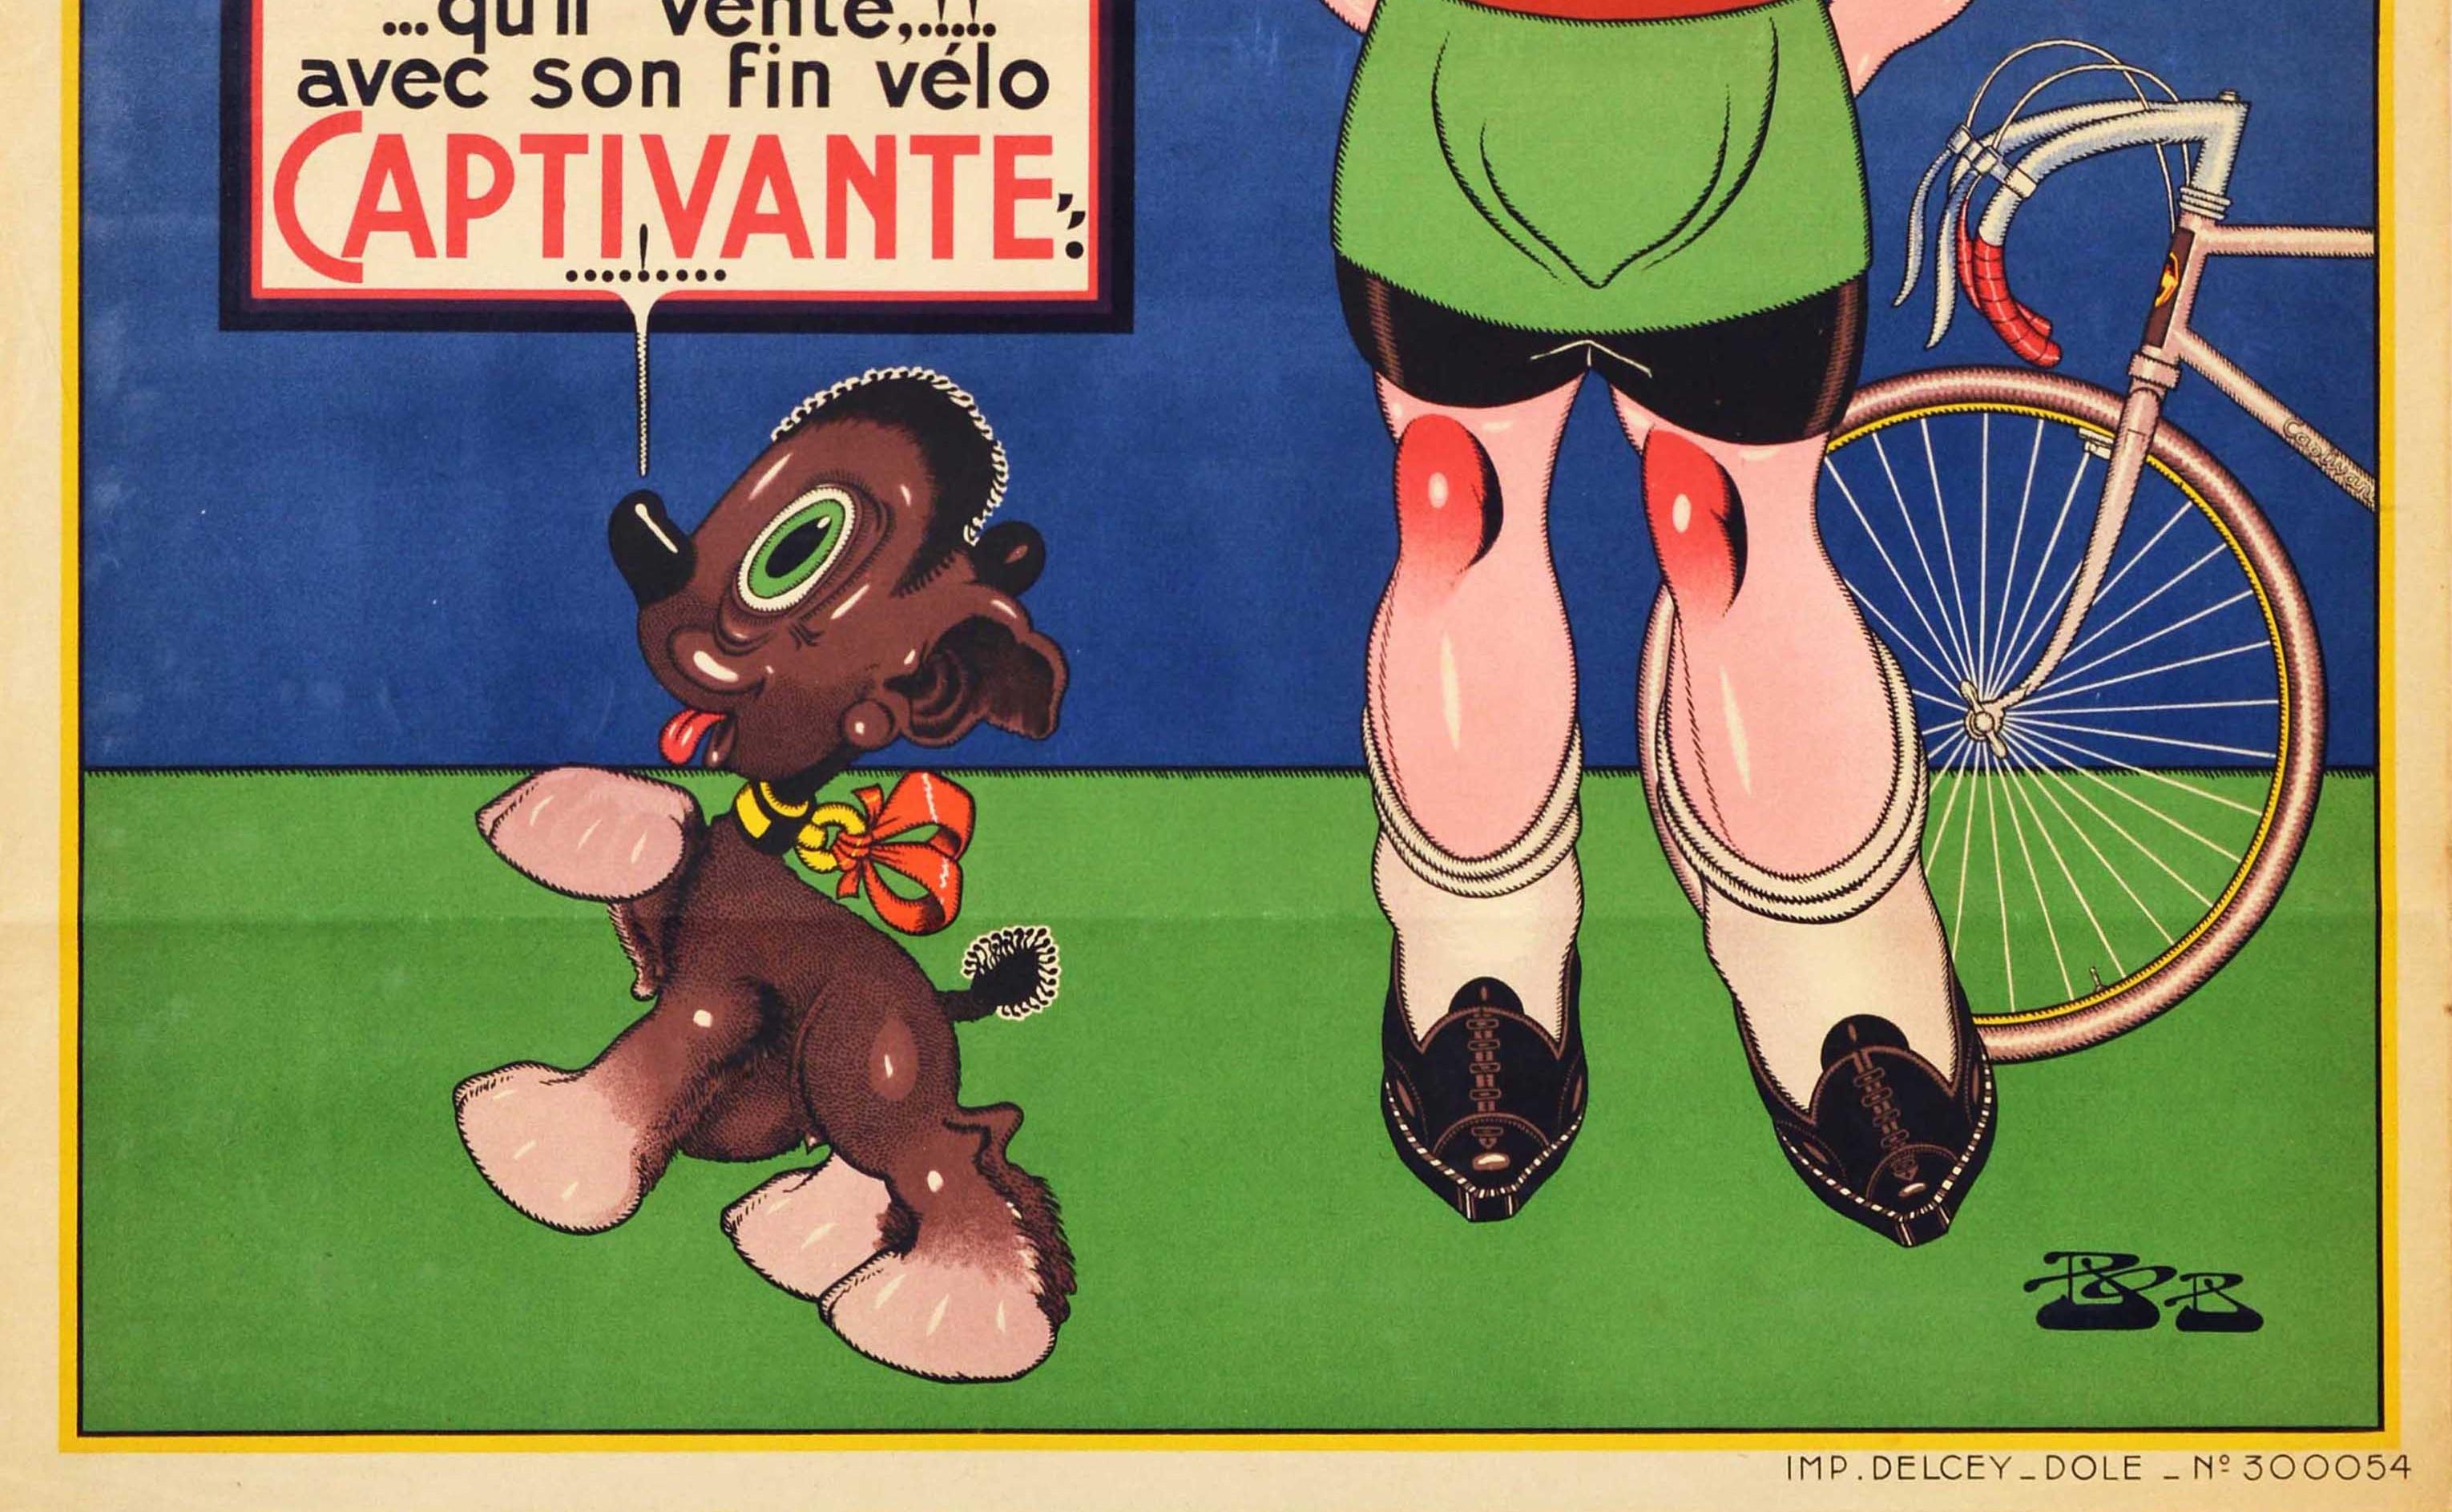 Original Vintage Poster Mon Velo Captivante Bicycle Advertising Art Child & Dog - Blue Print by Unknown